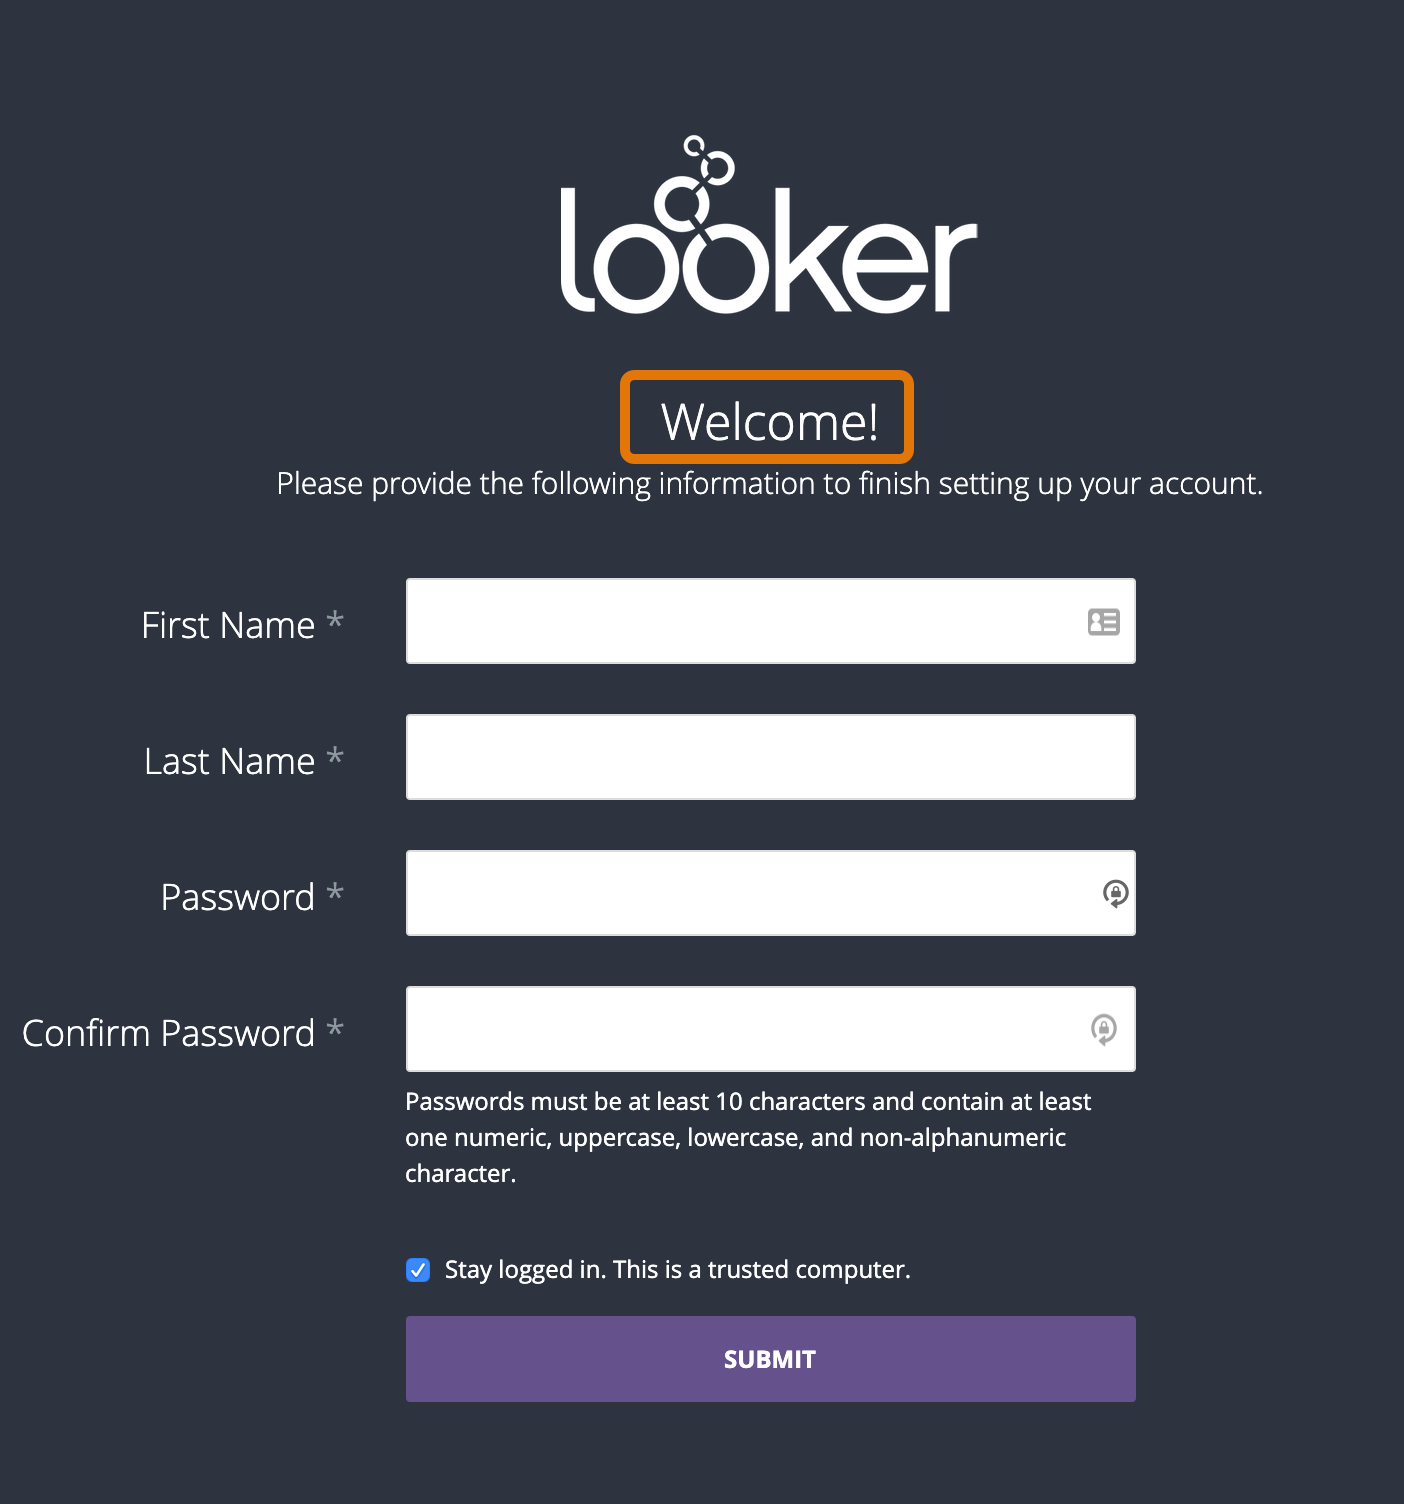 Looker 帐号设置页面的屏幕截图。页面顶部有一个 Looker 徽标，后跟文字“Welcome!”。